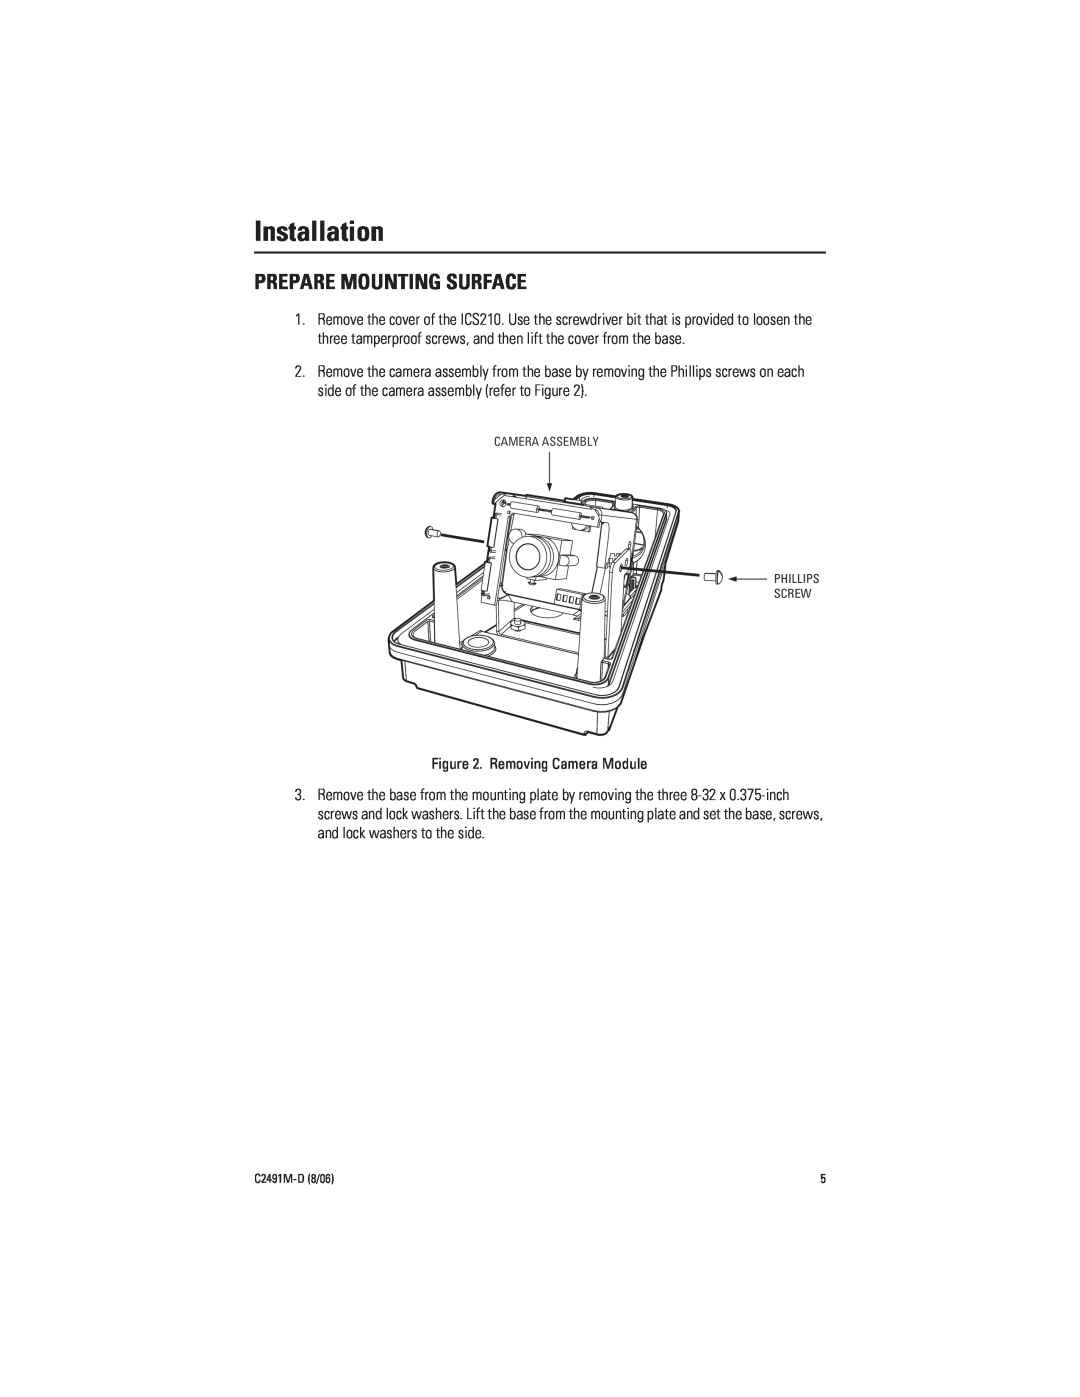 Pelco ICS210 manual Installation, Prepare Mounting Surface 